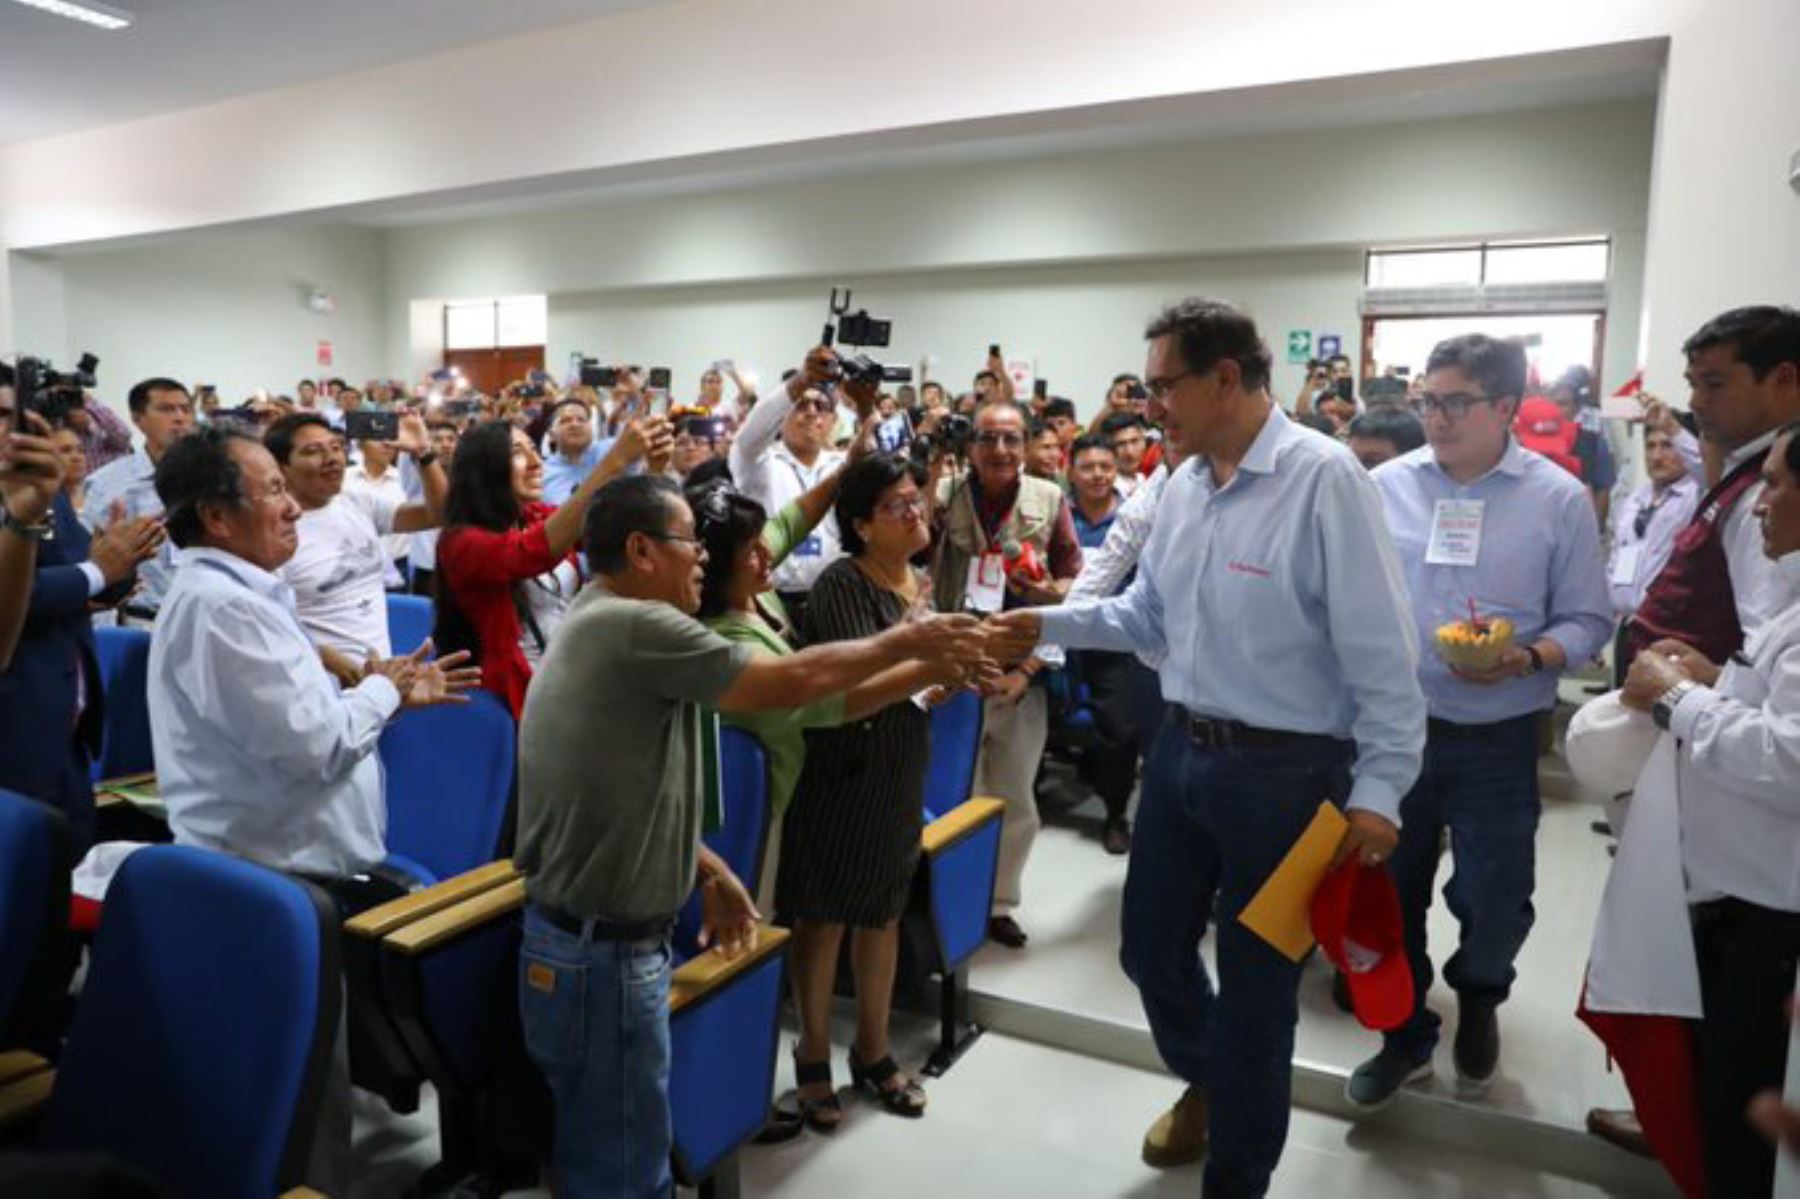 Alcaldes rurales expresan respaldo a presidente Martín Vizcarra por adelanto de elecciones. ANDINA/Difusión